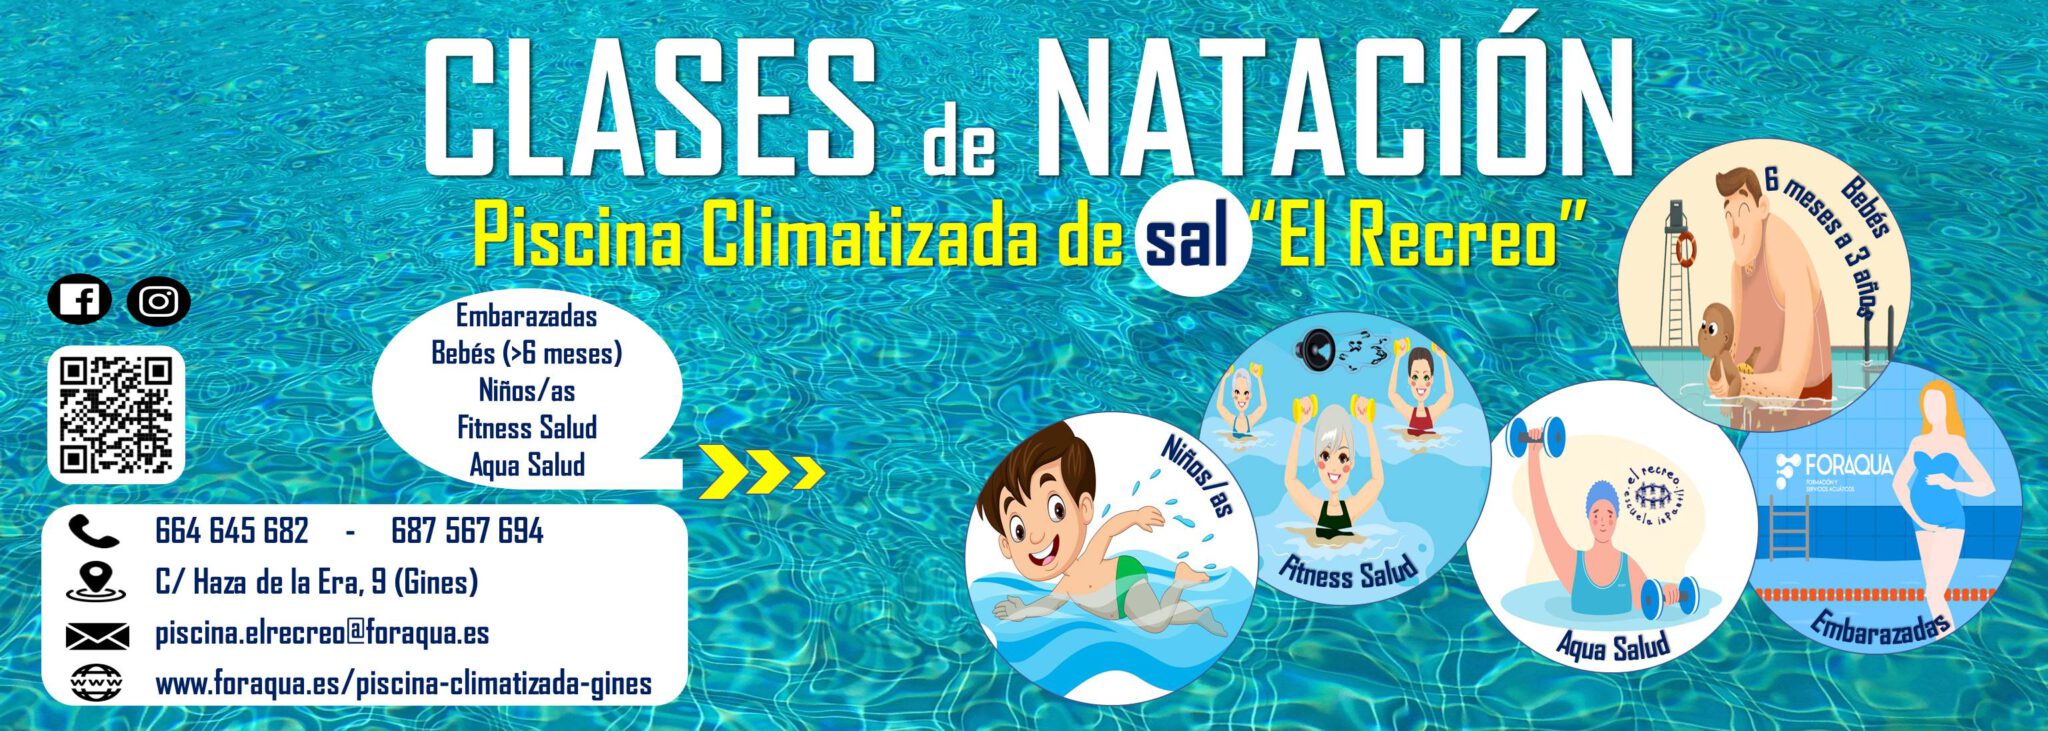 Clases de Natación Gines en piscina Climatizada El Recreo